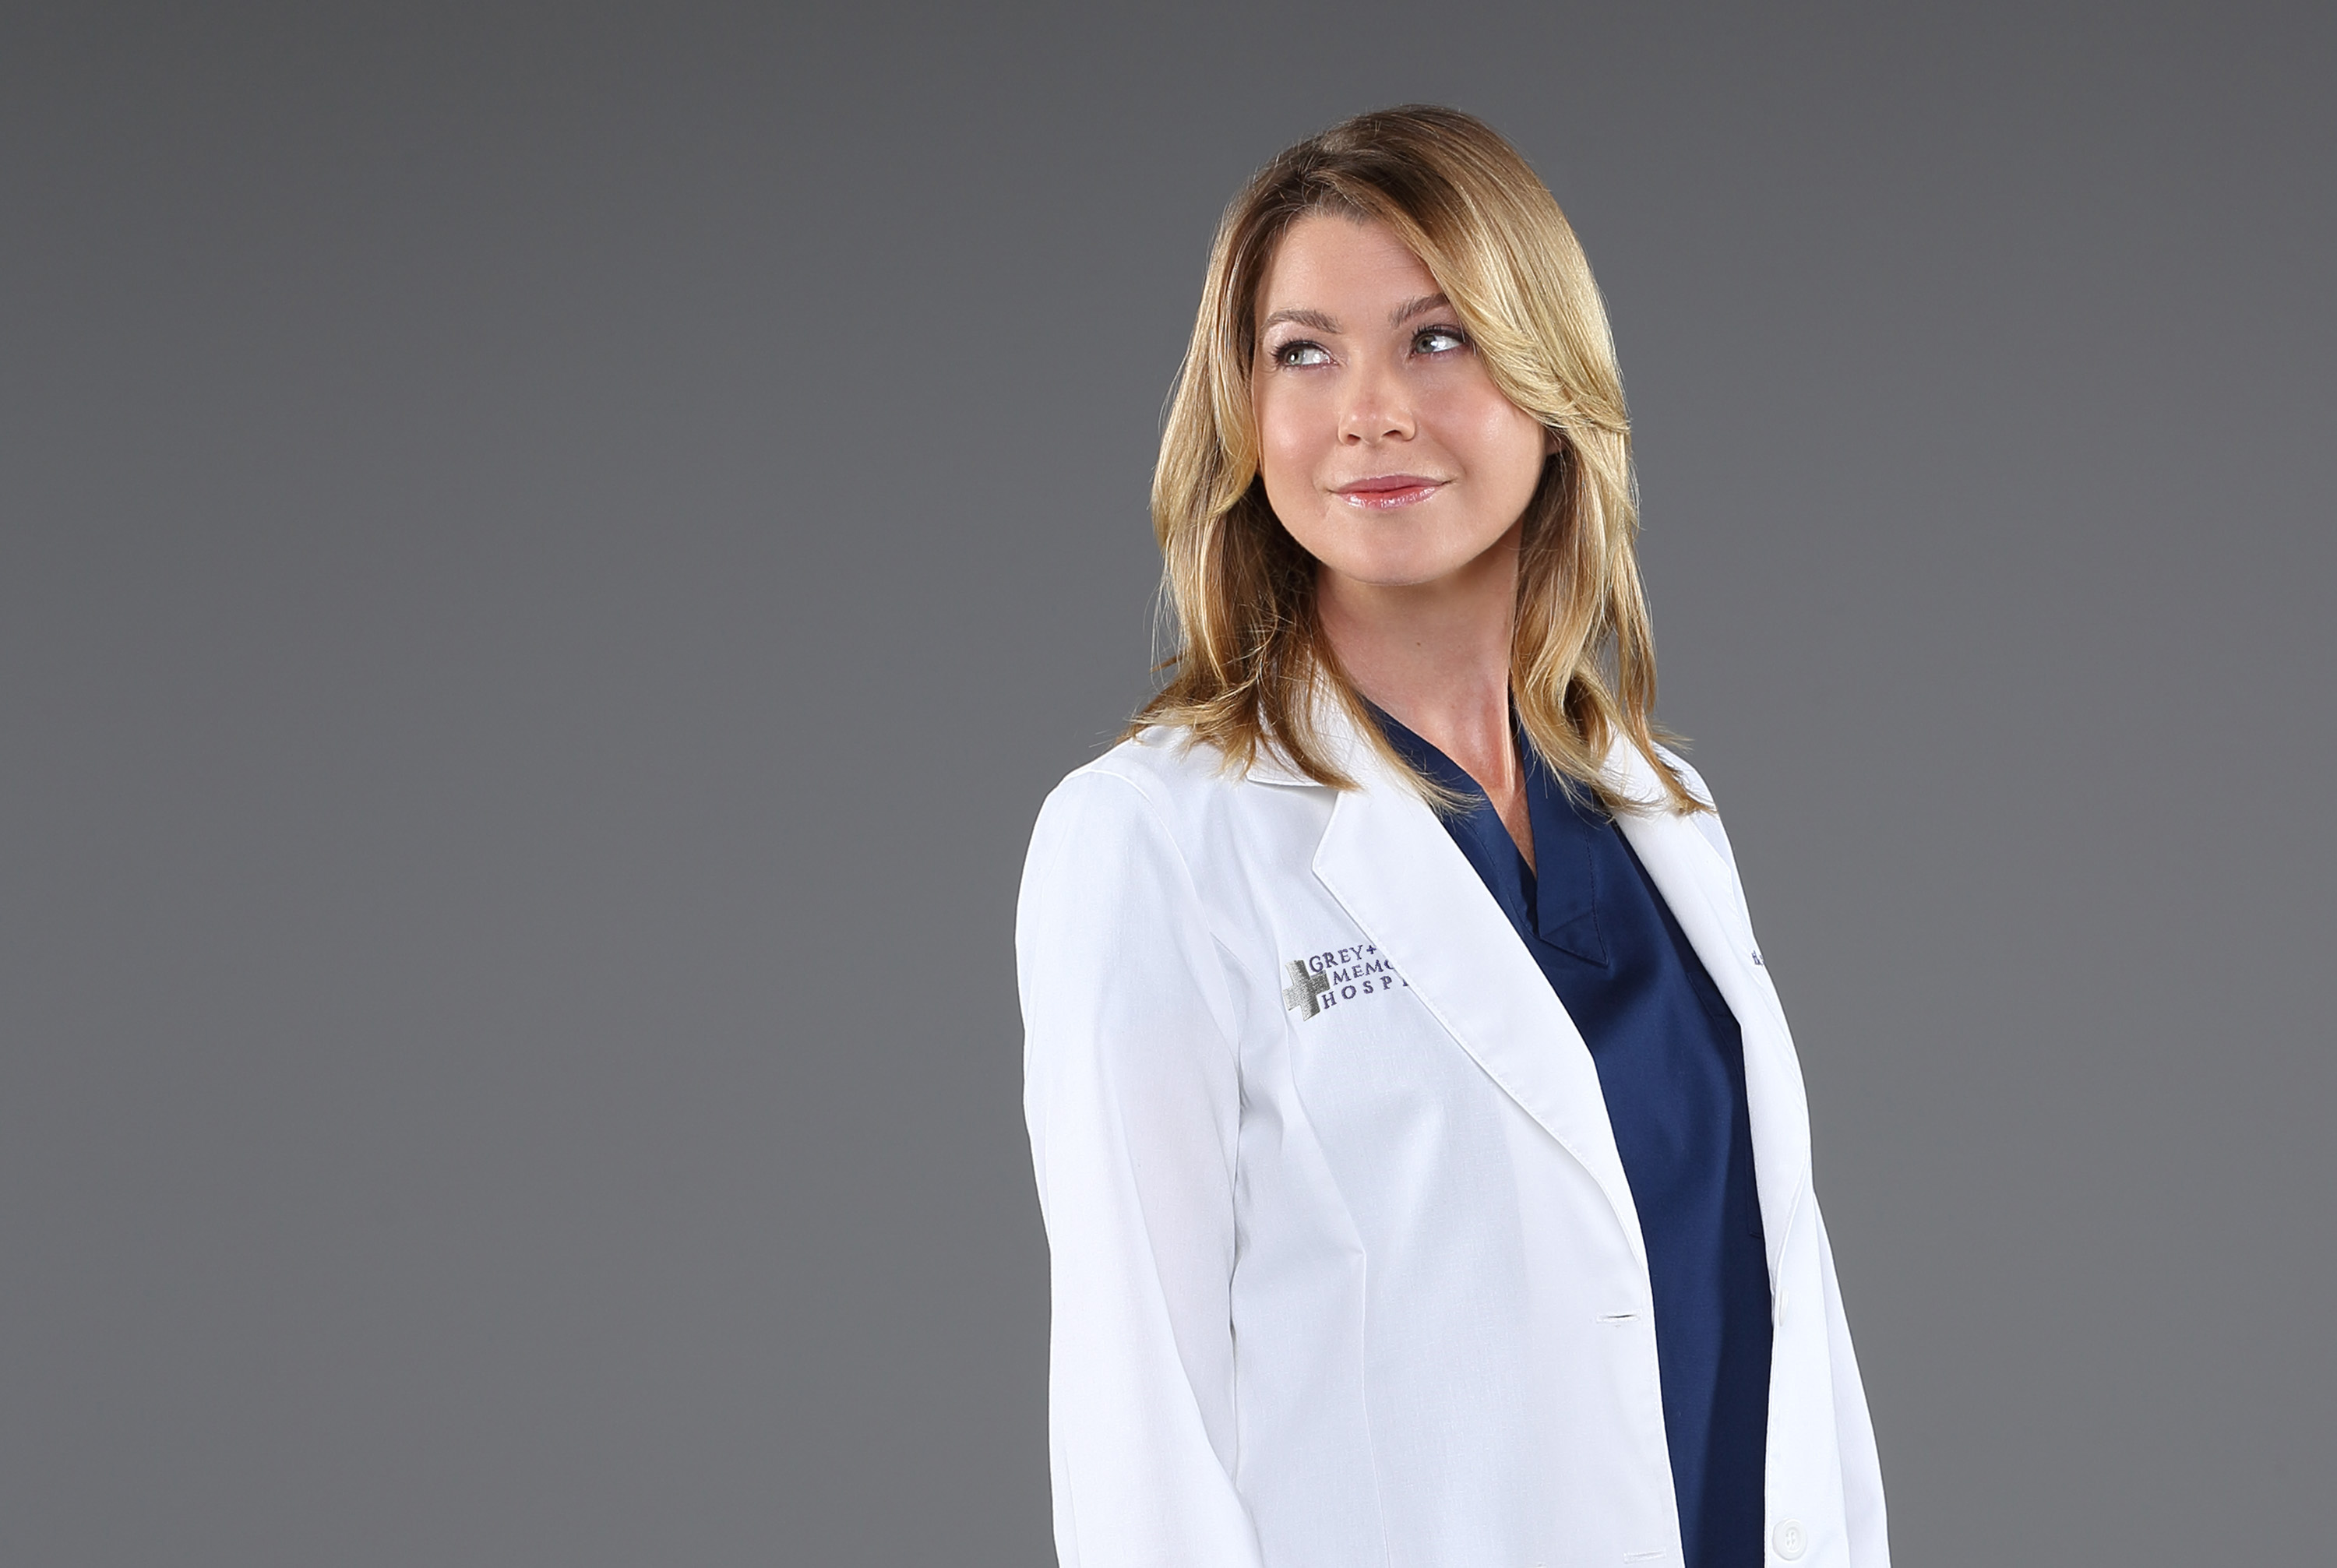 Grey's Anatomy: Ellen Pompeo on How Meredith Dealt With Loss